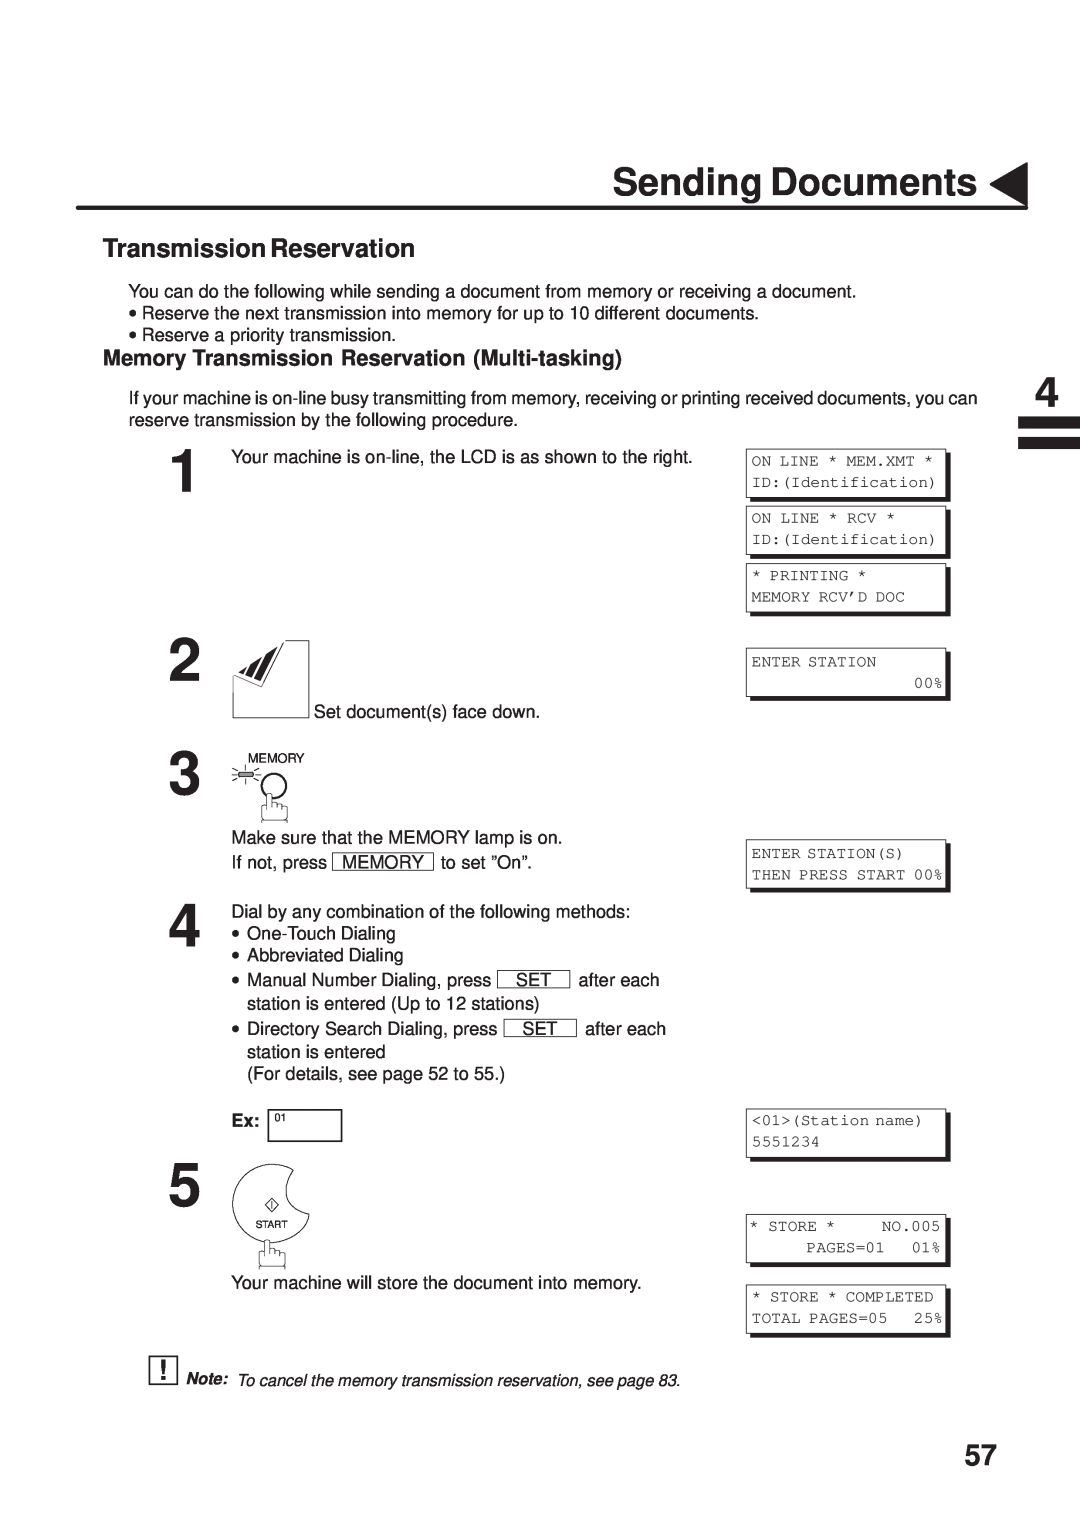 Panasonic UF-333 manual Memory Transmission Reservation Multi-tasking, Sending Documents 